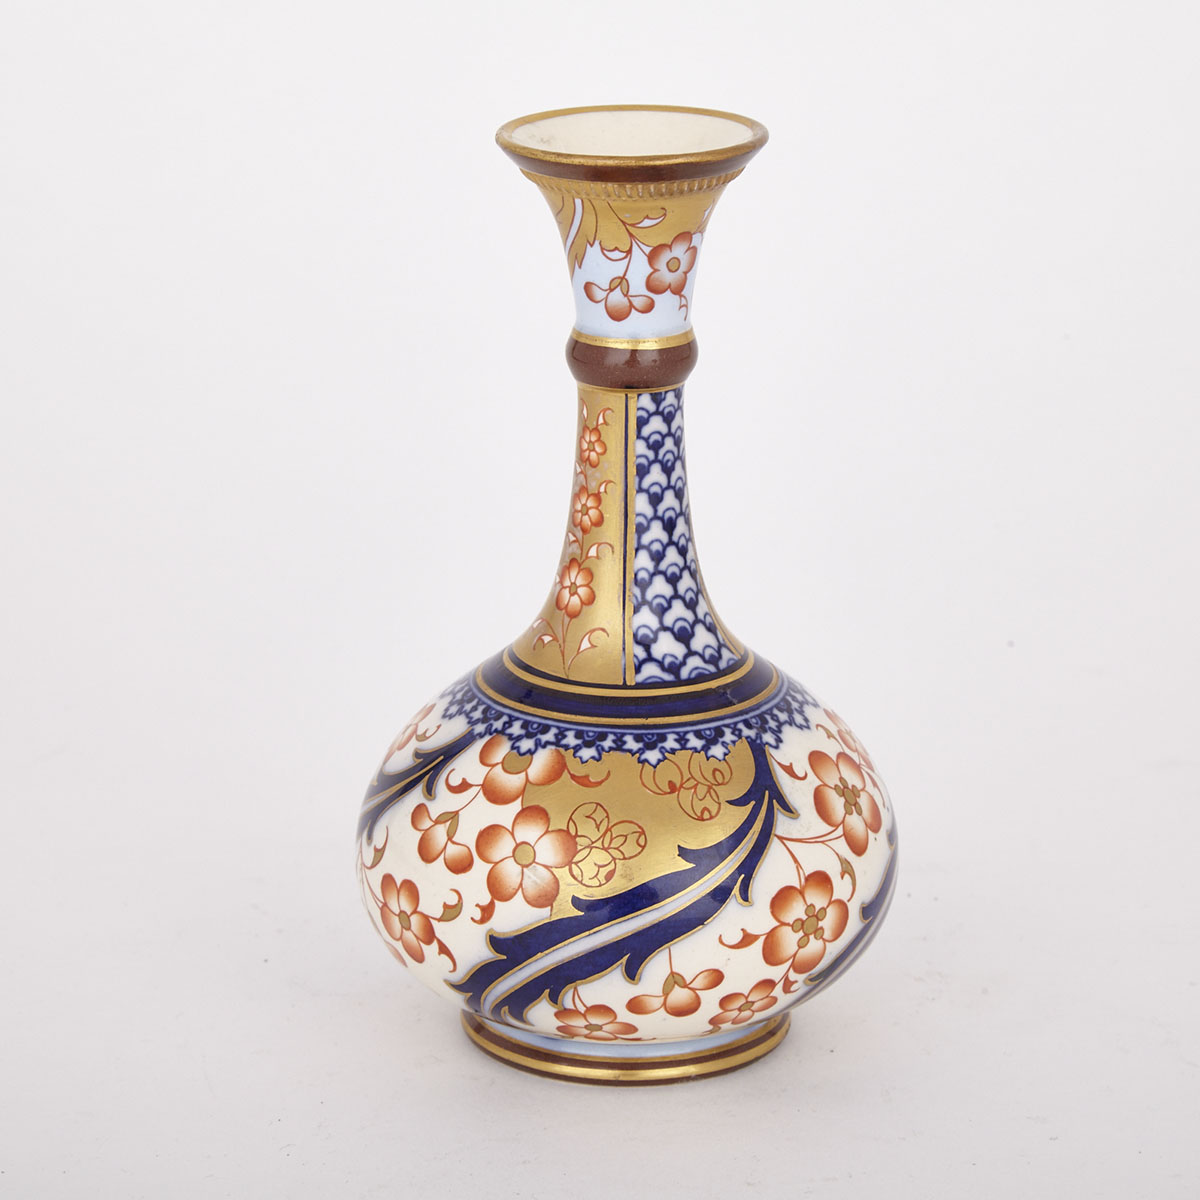 Macintyre Moorcroft Aurelian Vase, c.1898-1900